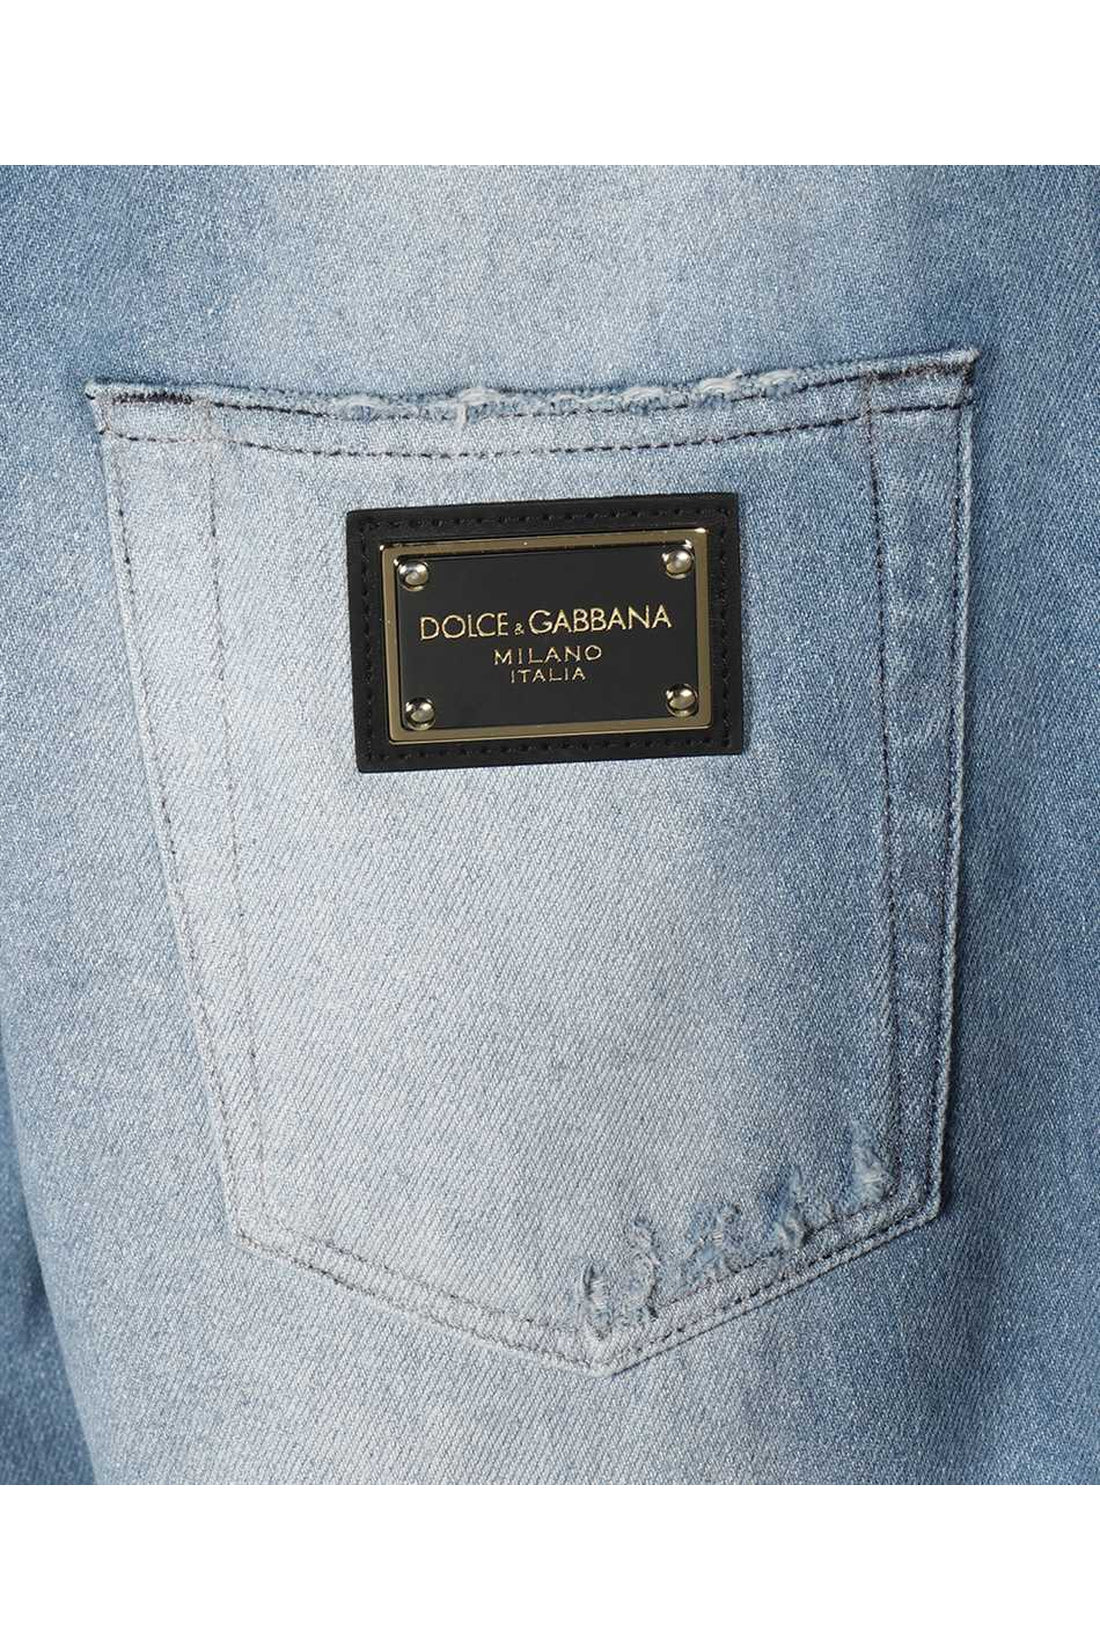 Dolce & Gabbana-OUTLET-SALE-Denim bermuda shorts-ARCHIVIST